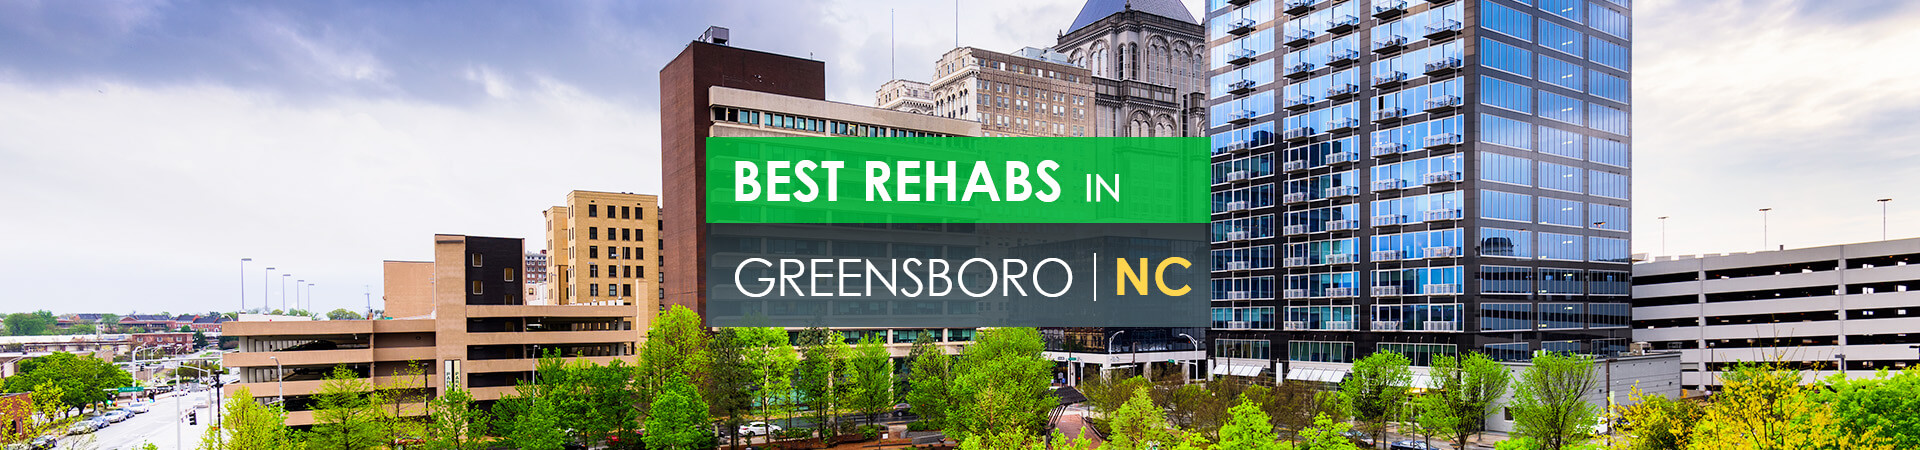 Best rehabs in Greensboro, NC